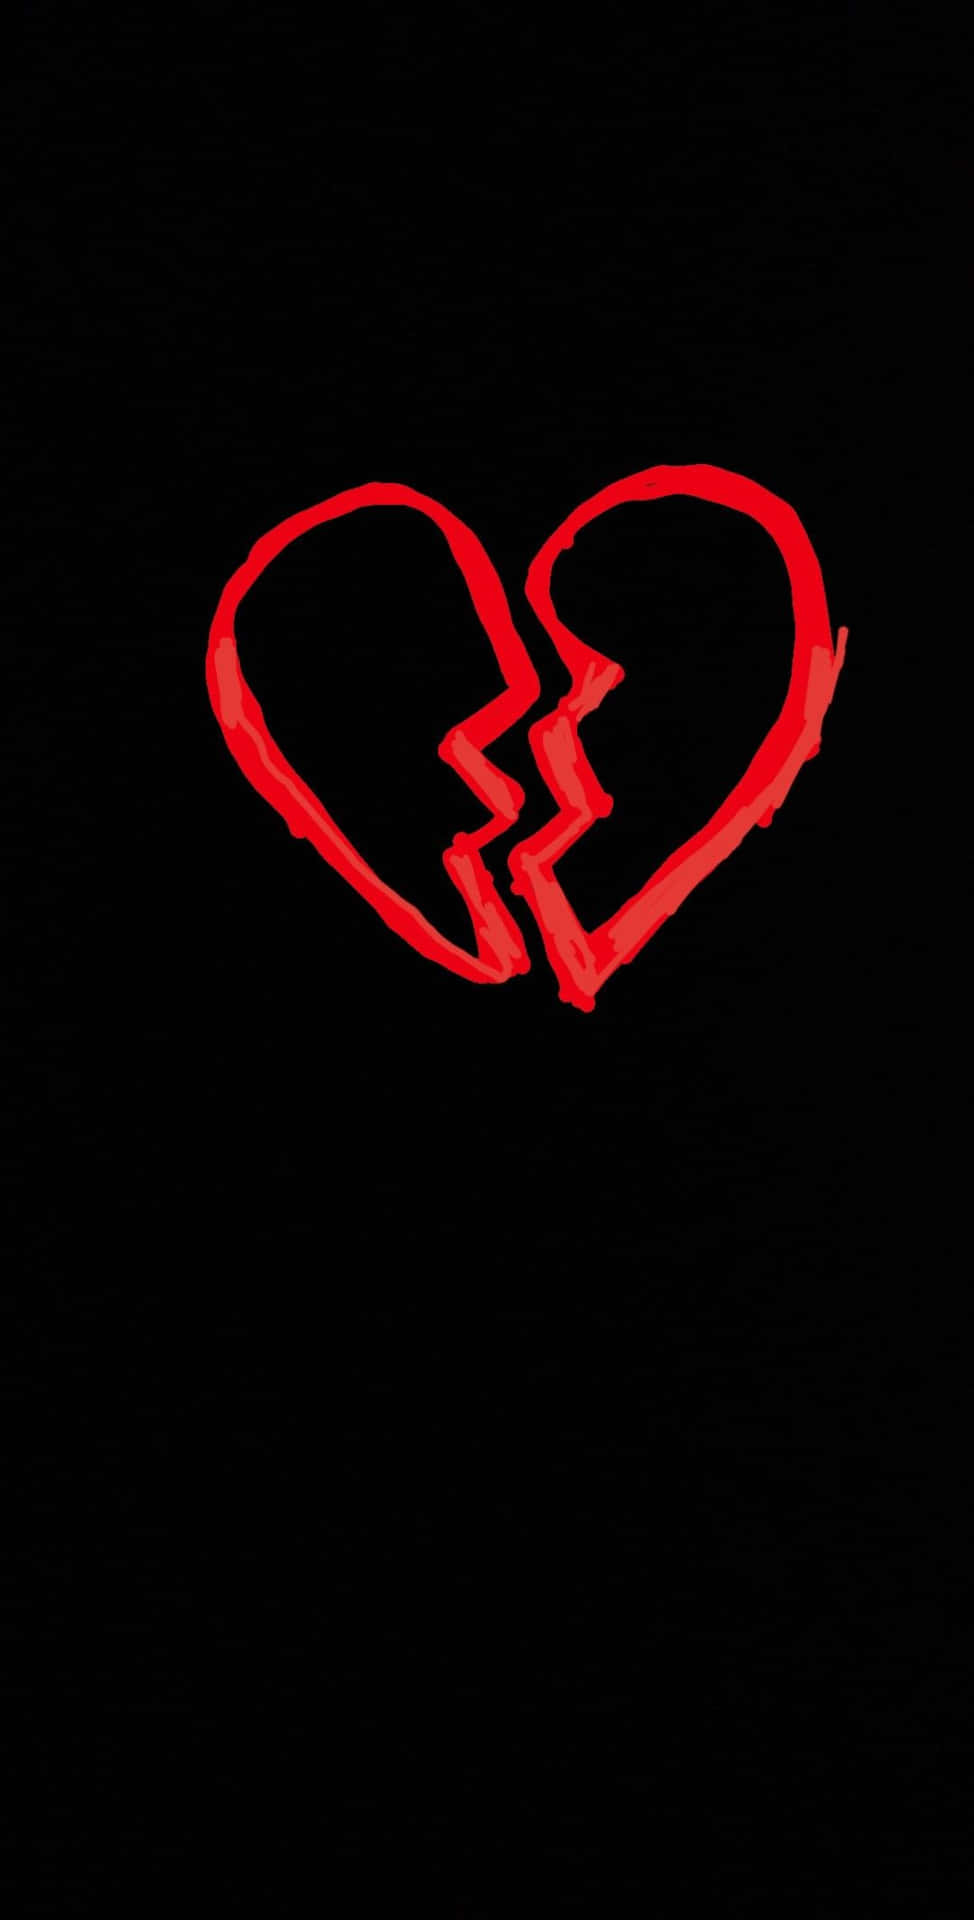 Red Broken Heart Aesthetics Wallpaper